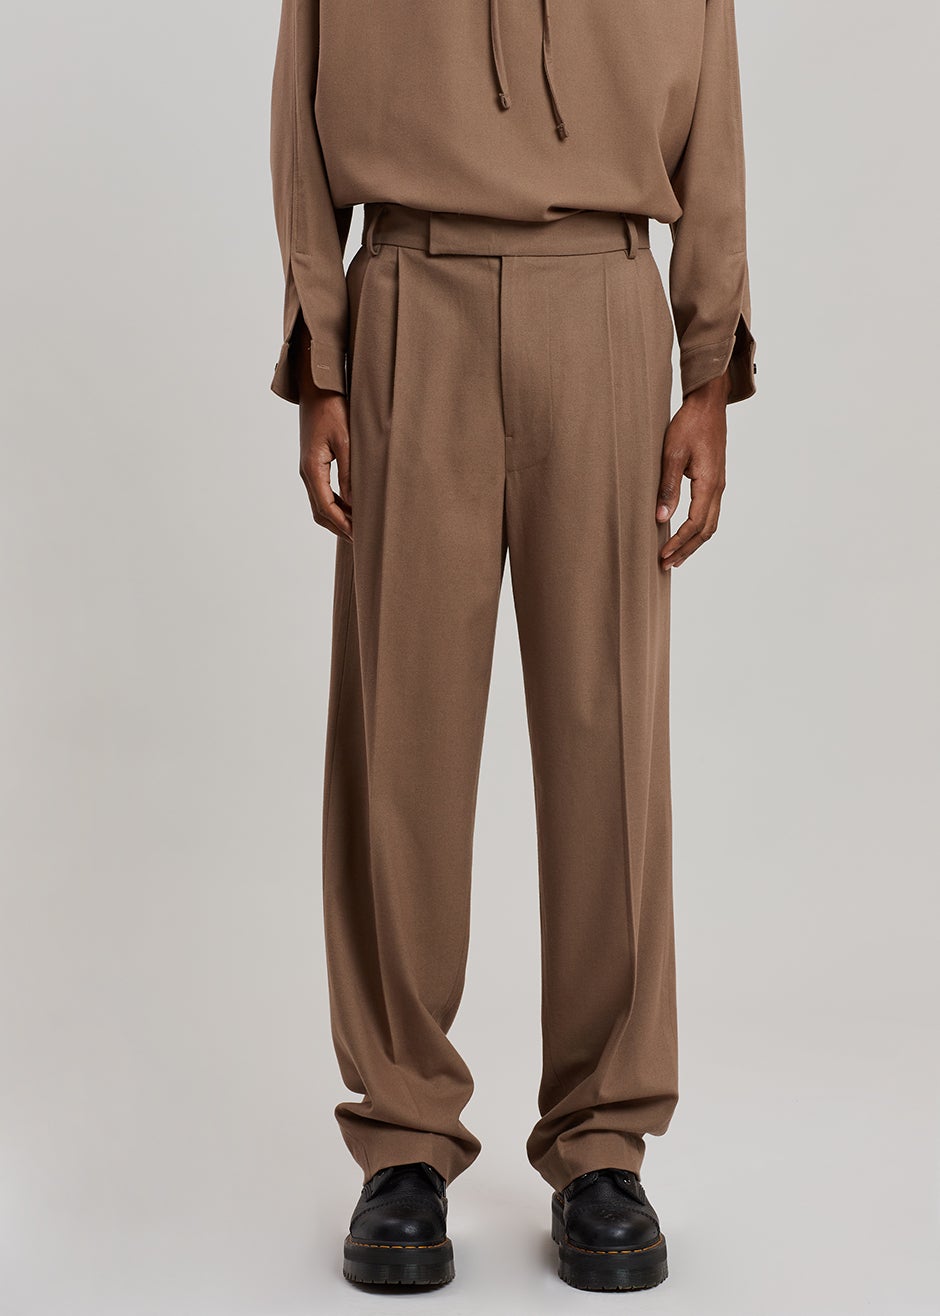 Heith Flanelle Suit Pants - Hazelnut - 3